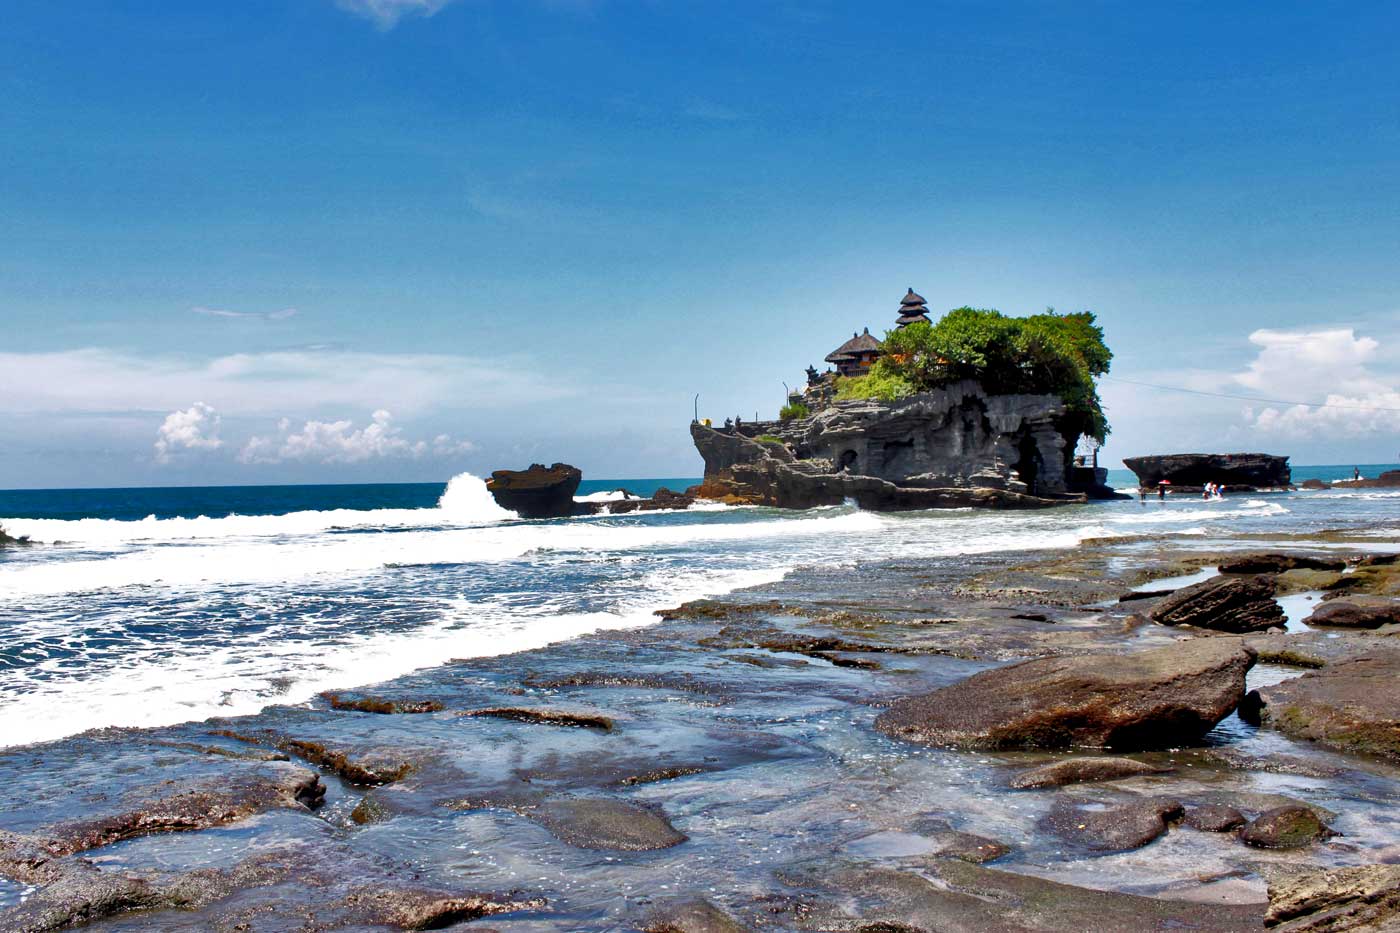  Tanah Lot  One of Favorite Travel Sites in Bali Traveldigg com